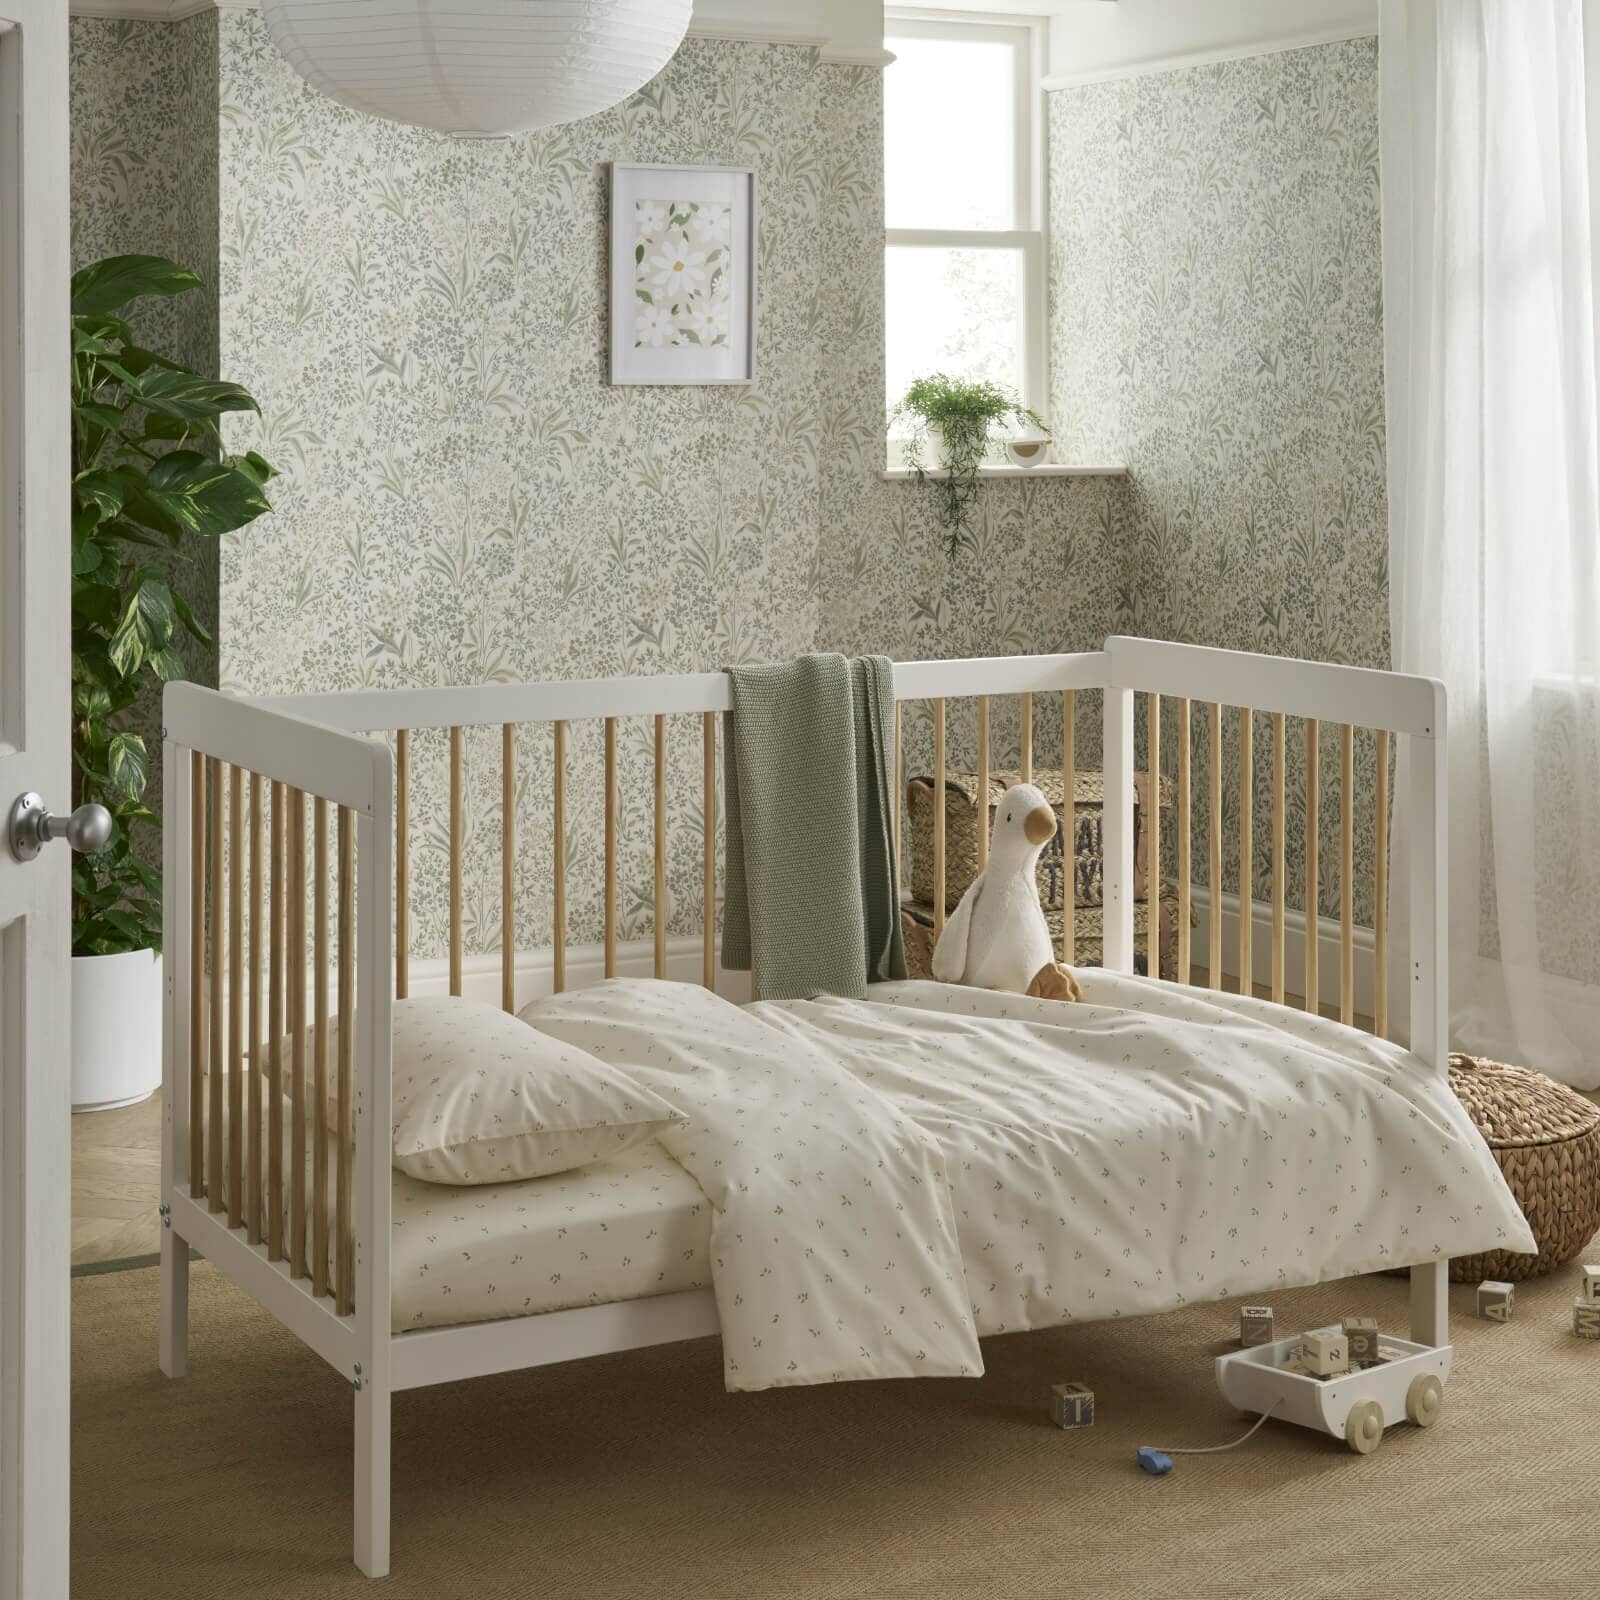 Nola 2 Piece Nursery Furniture Set - White & Natural Furniture Sets CuddleCo 